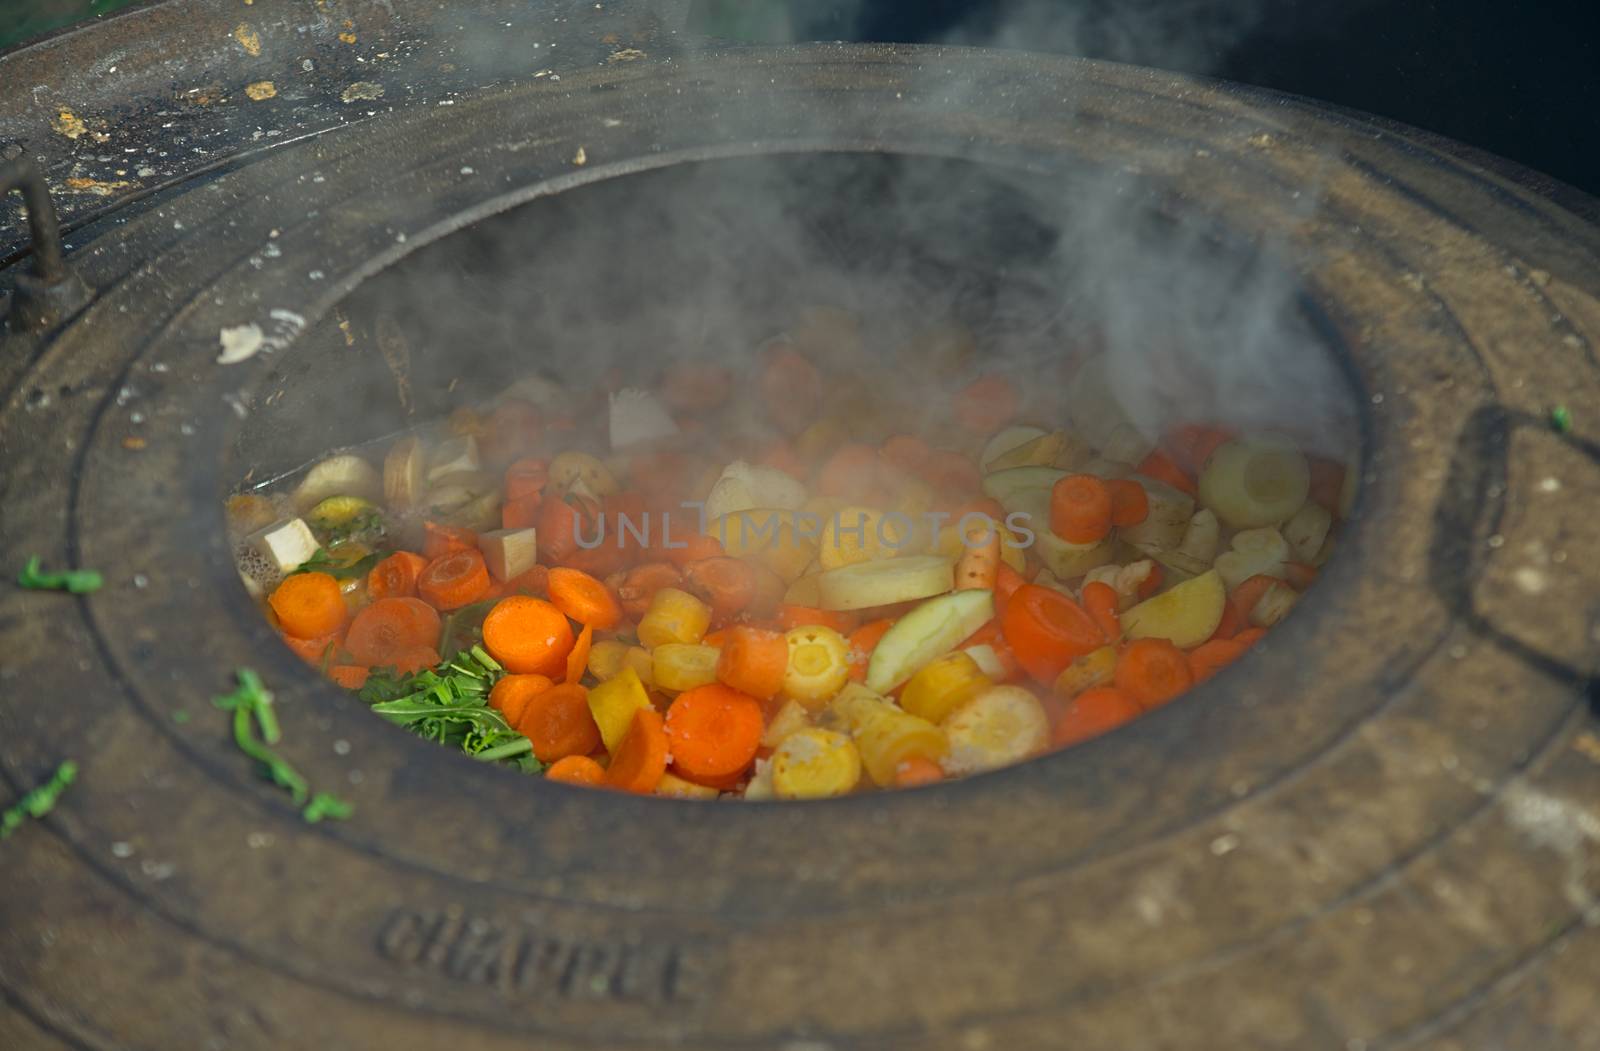 Medieval style cooking of various vegetables in big metal pot by sheriffkule